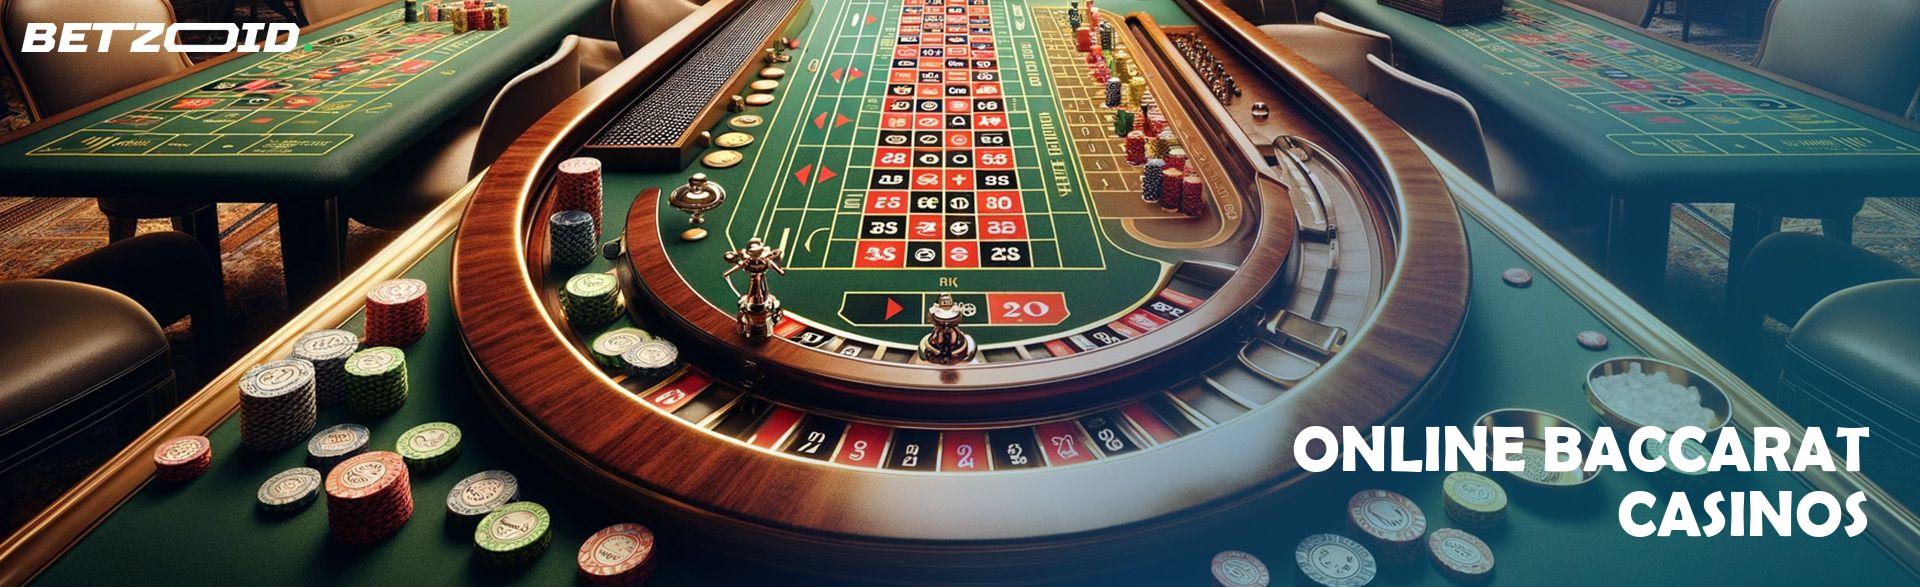 Online Baccarat Casinos.